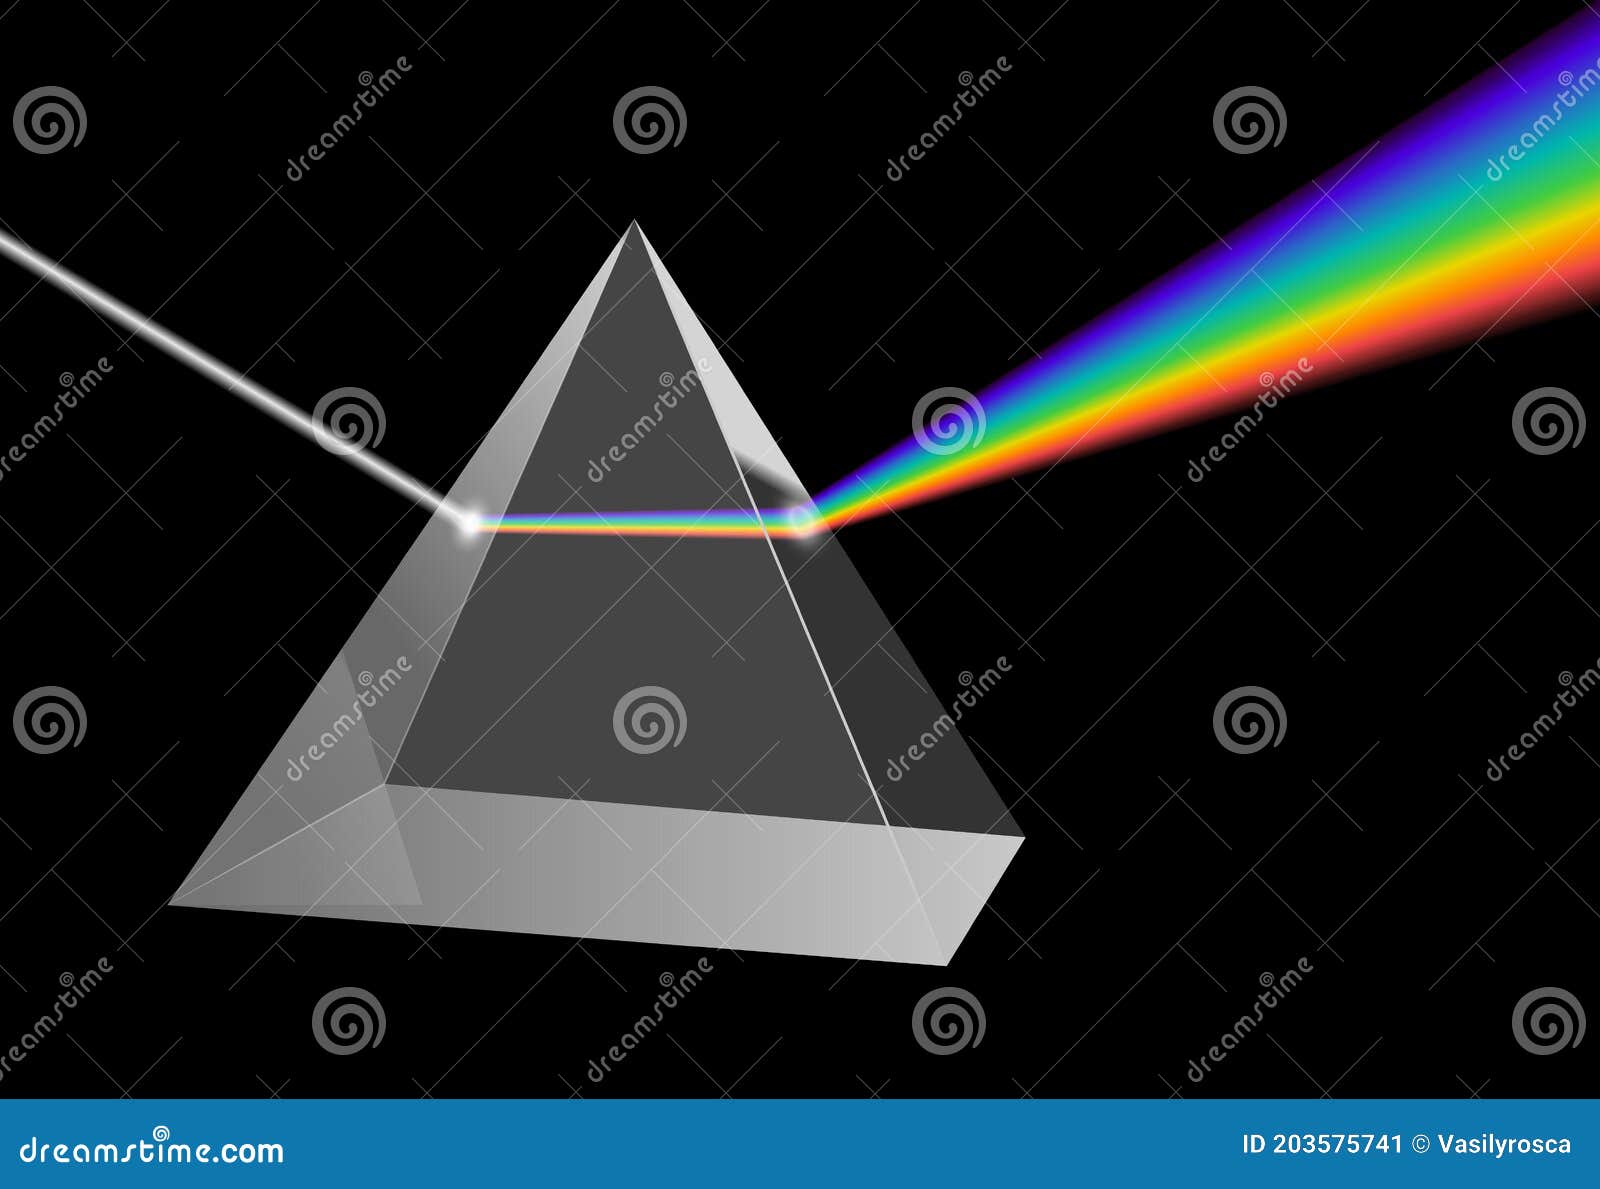 electromagnetic prism light refraction spectrum. optics floyd pyramid rainbow dispersion glass